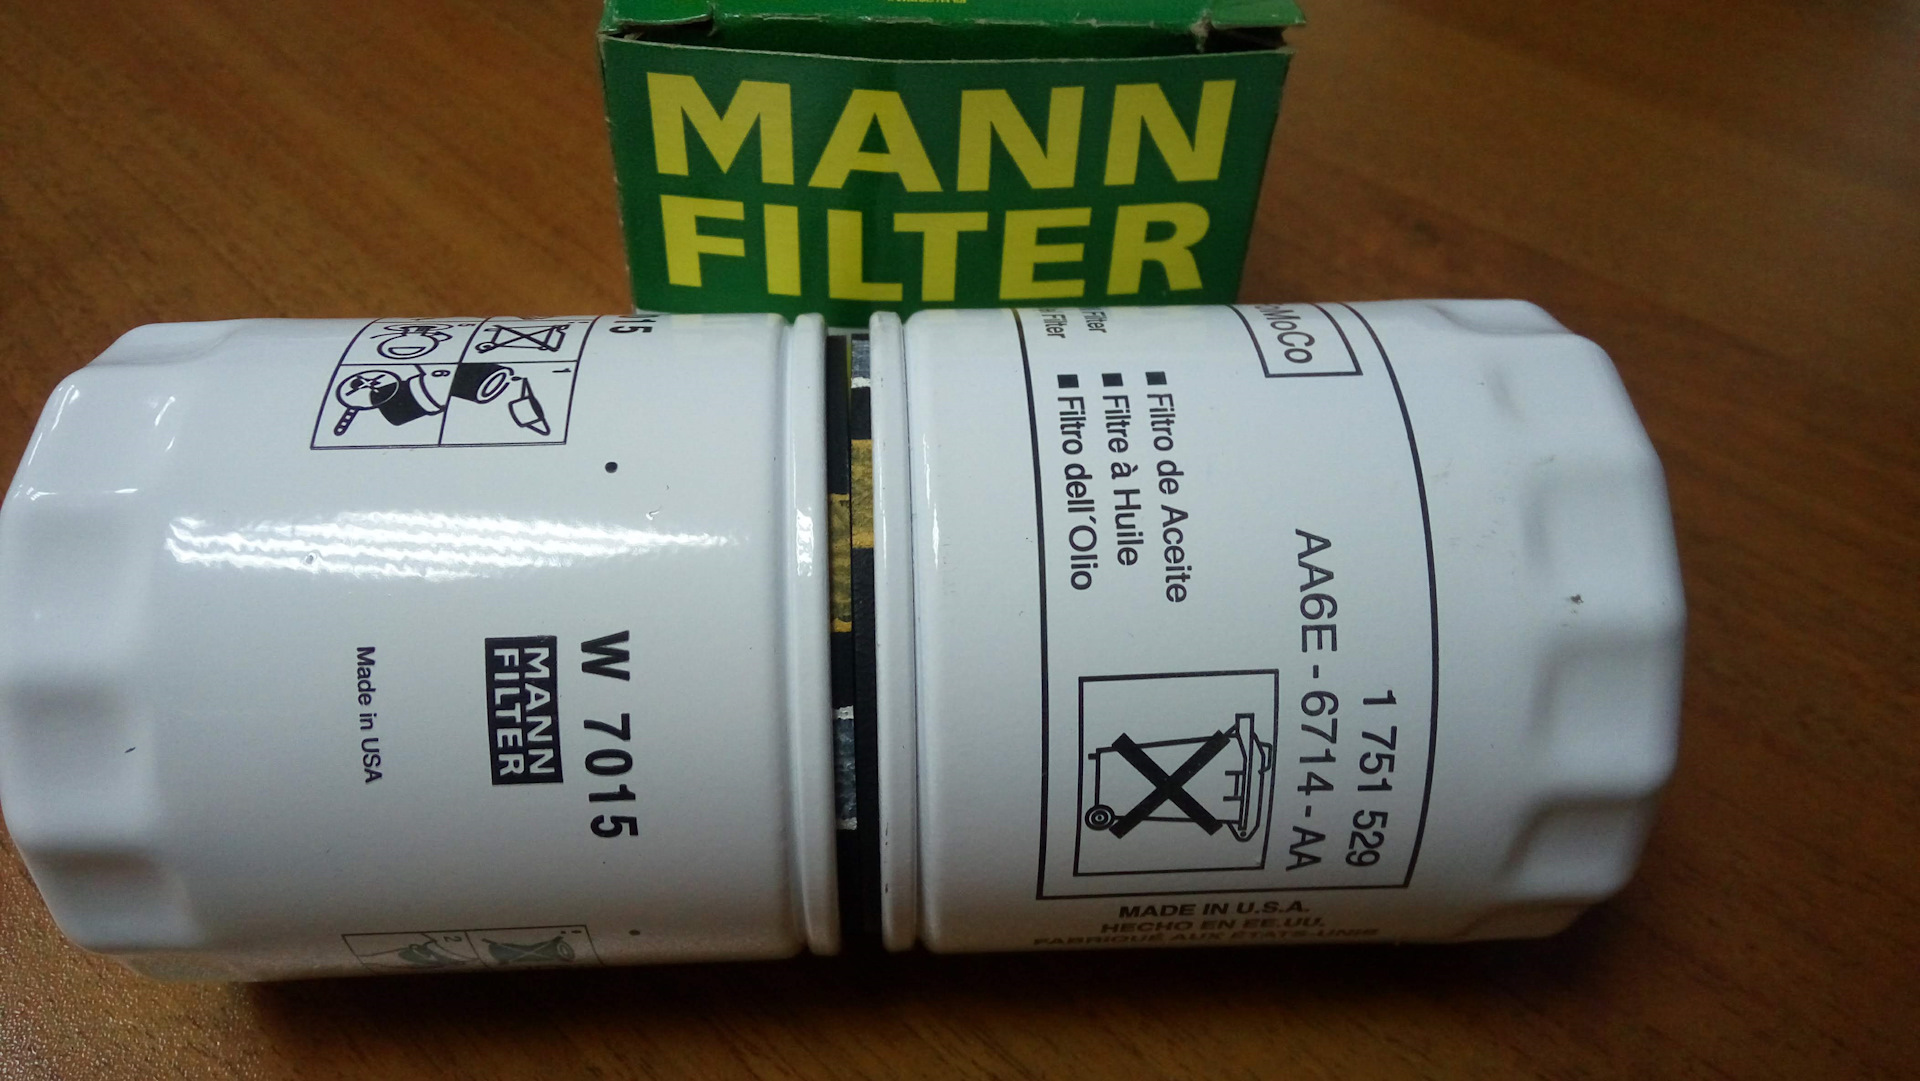 Mann w7015. Фильтр Mann w7015. Mann-Filter w 7015. Масляный фильтр Манн 7015. Фильтр масляный Манн оригинал w7015.